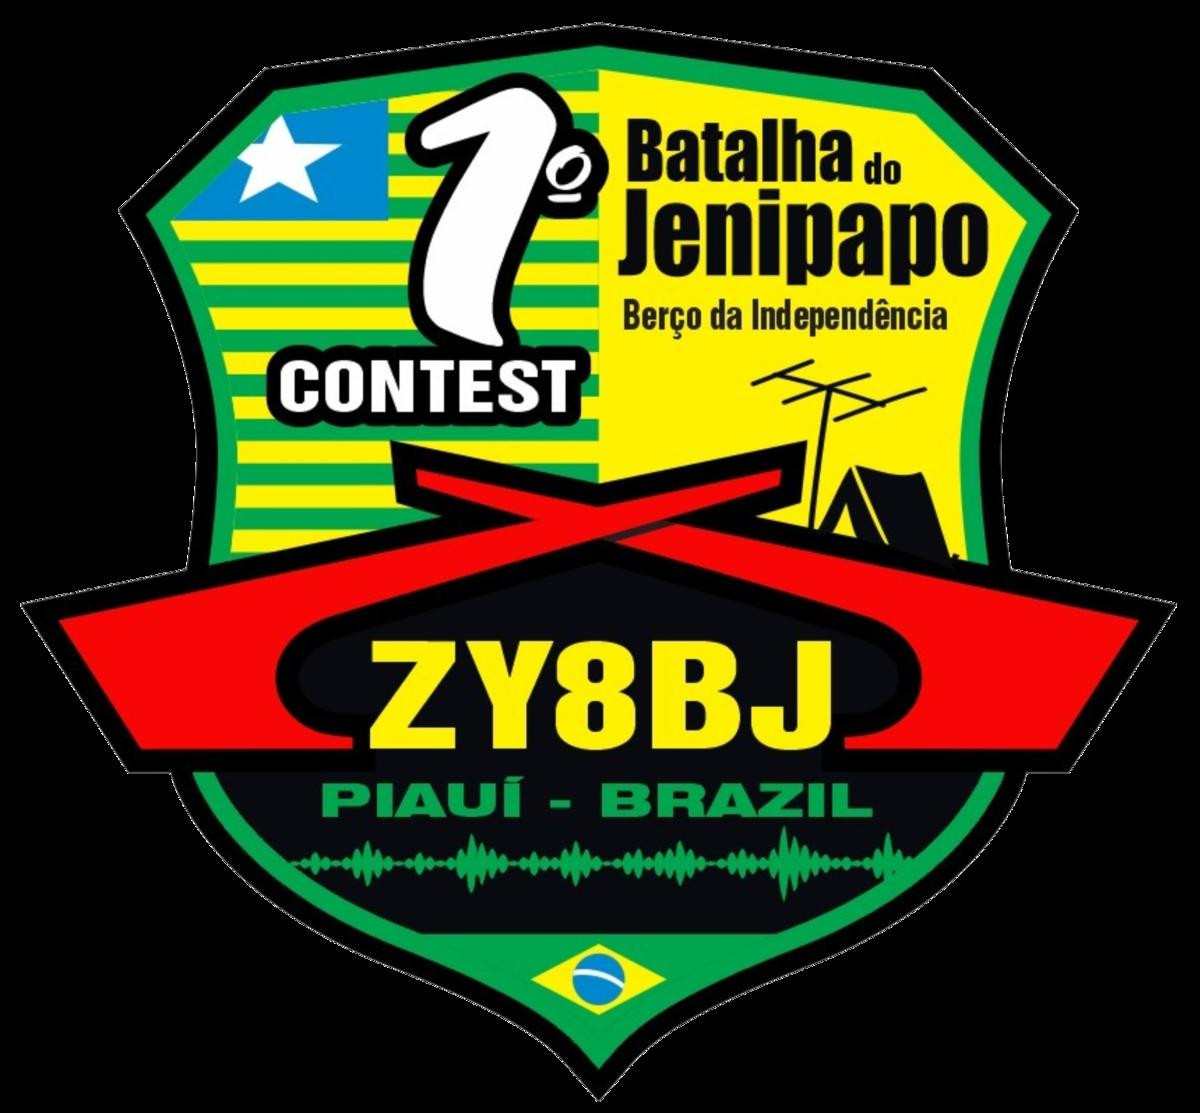 ZY8BJ Battle Jenipapo, Samapi, Teresina, Brazil